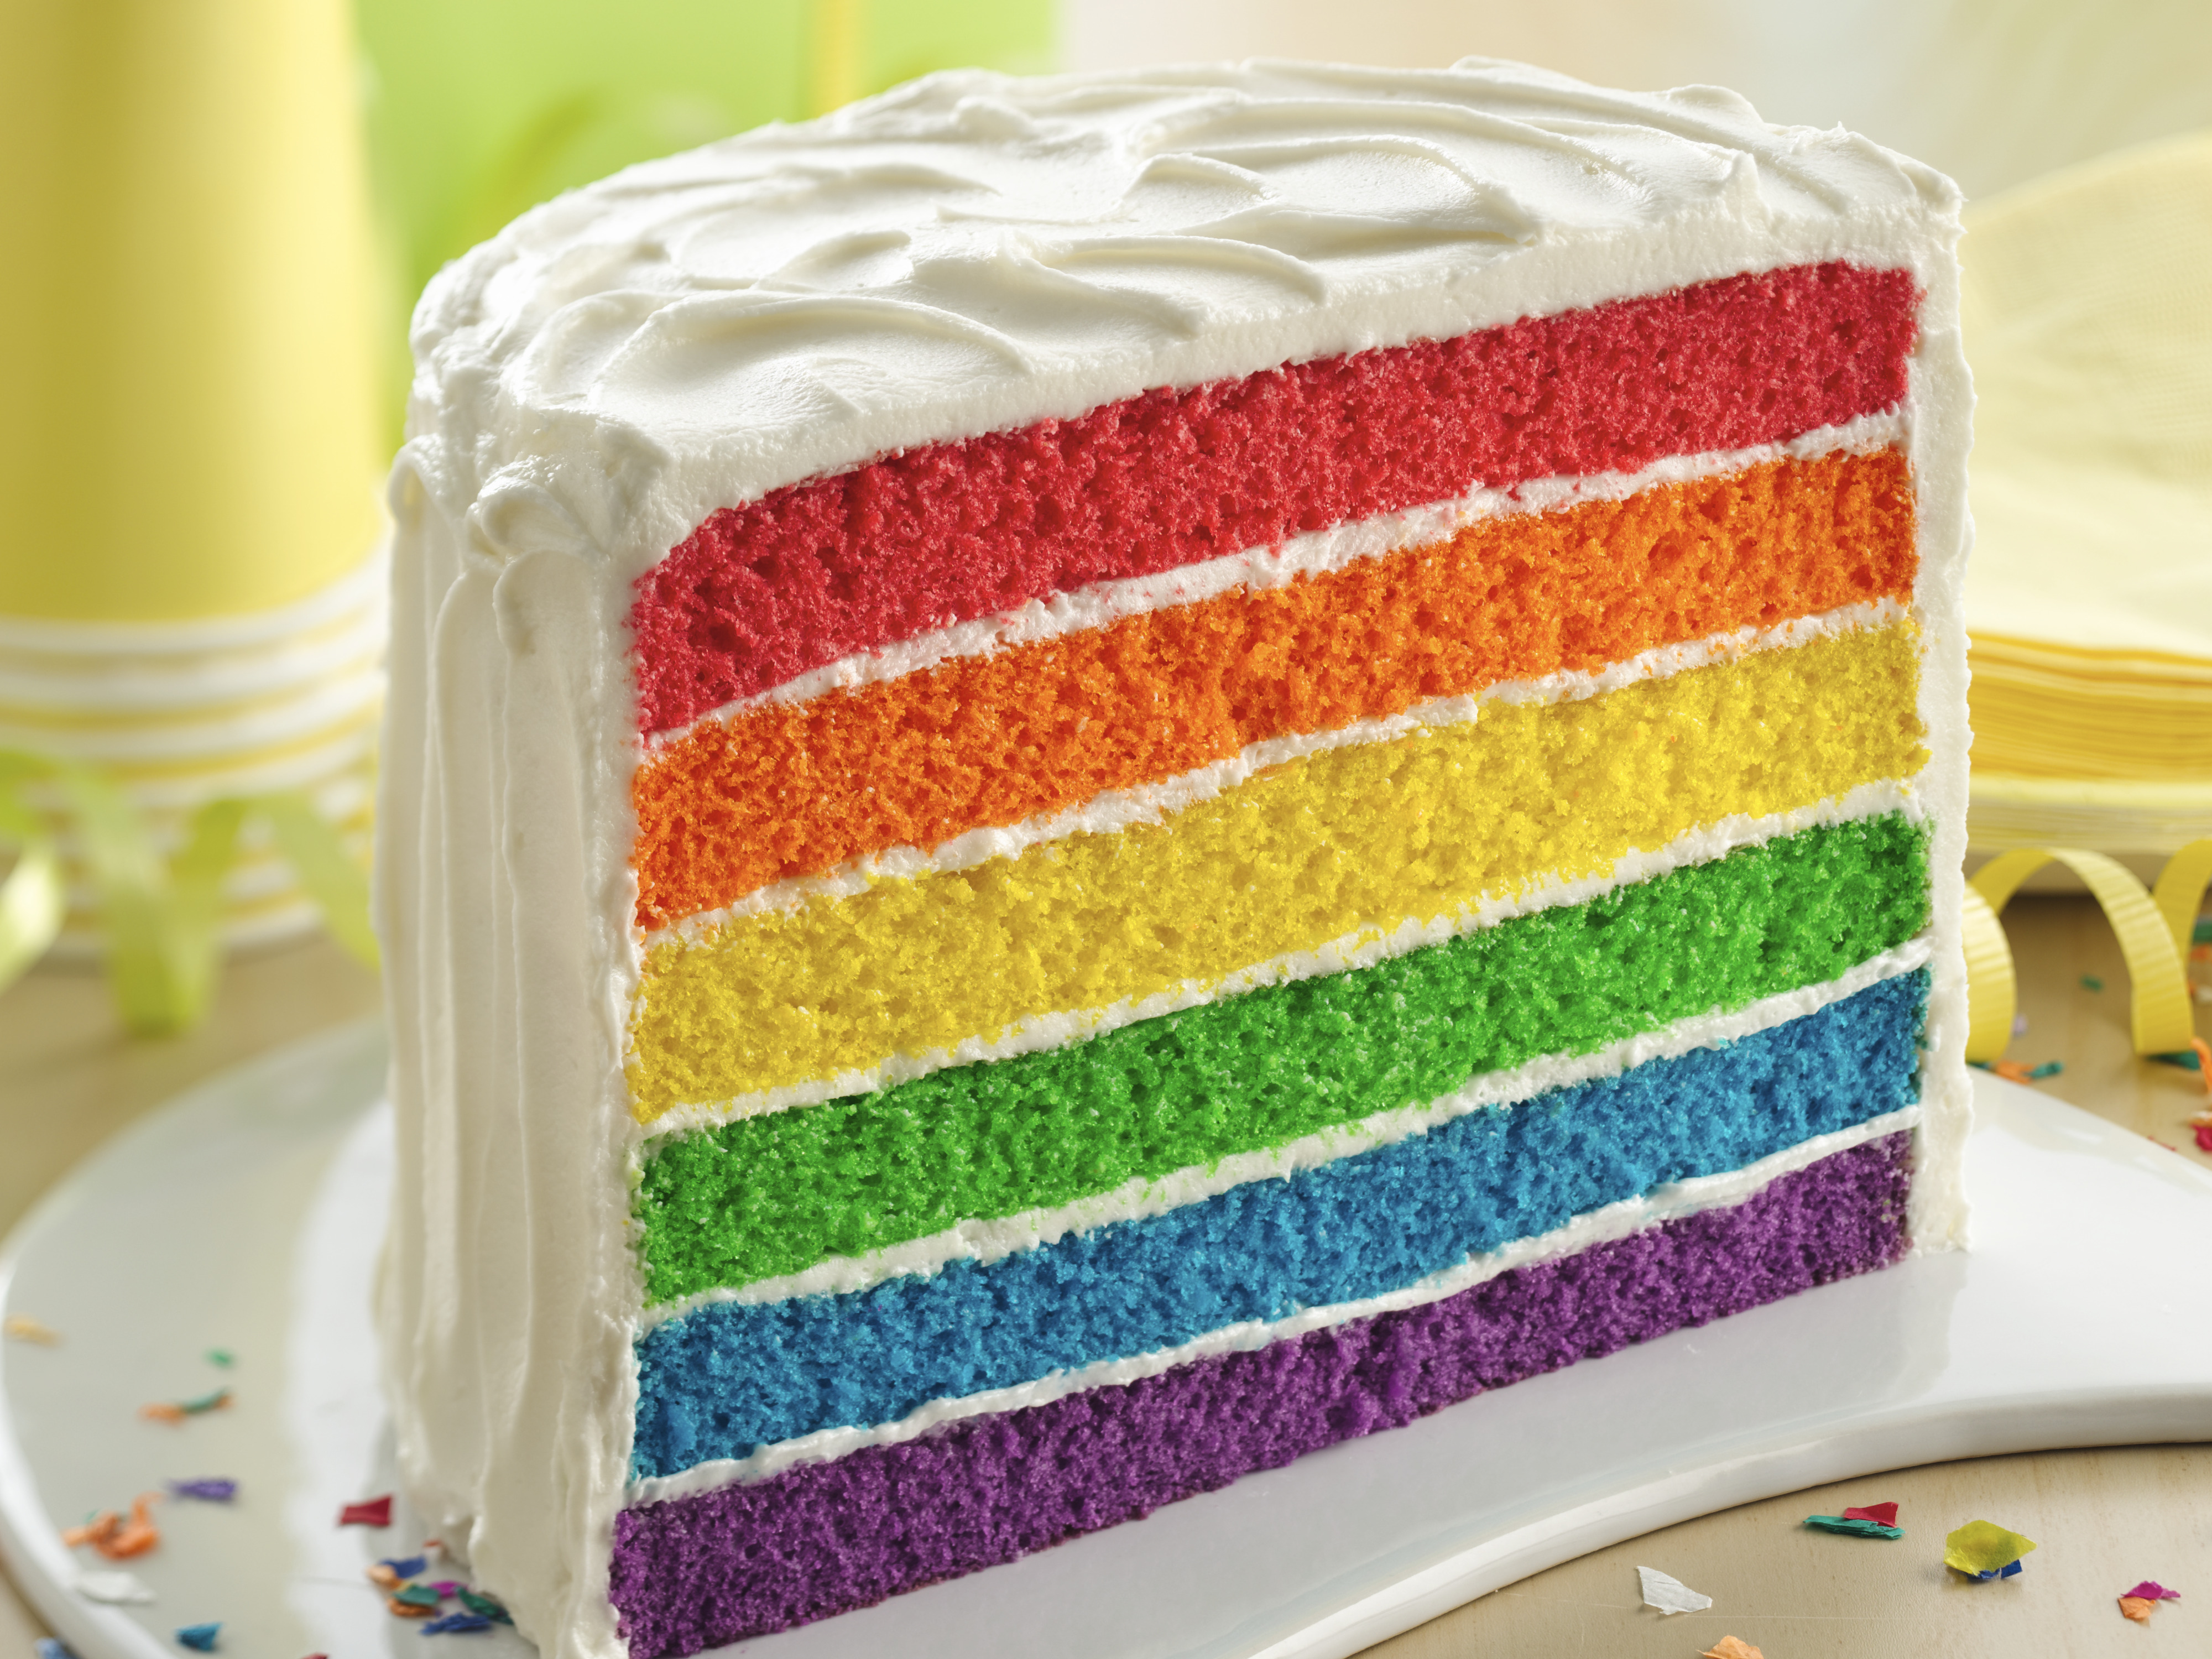 Rainbow Explosion Cake! - Jane's Patisserie